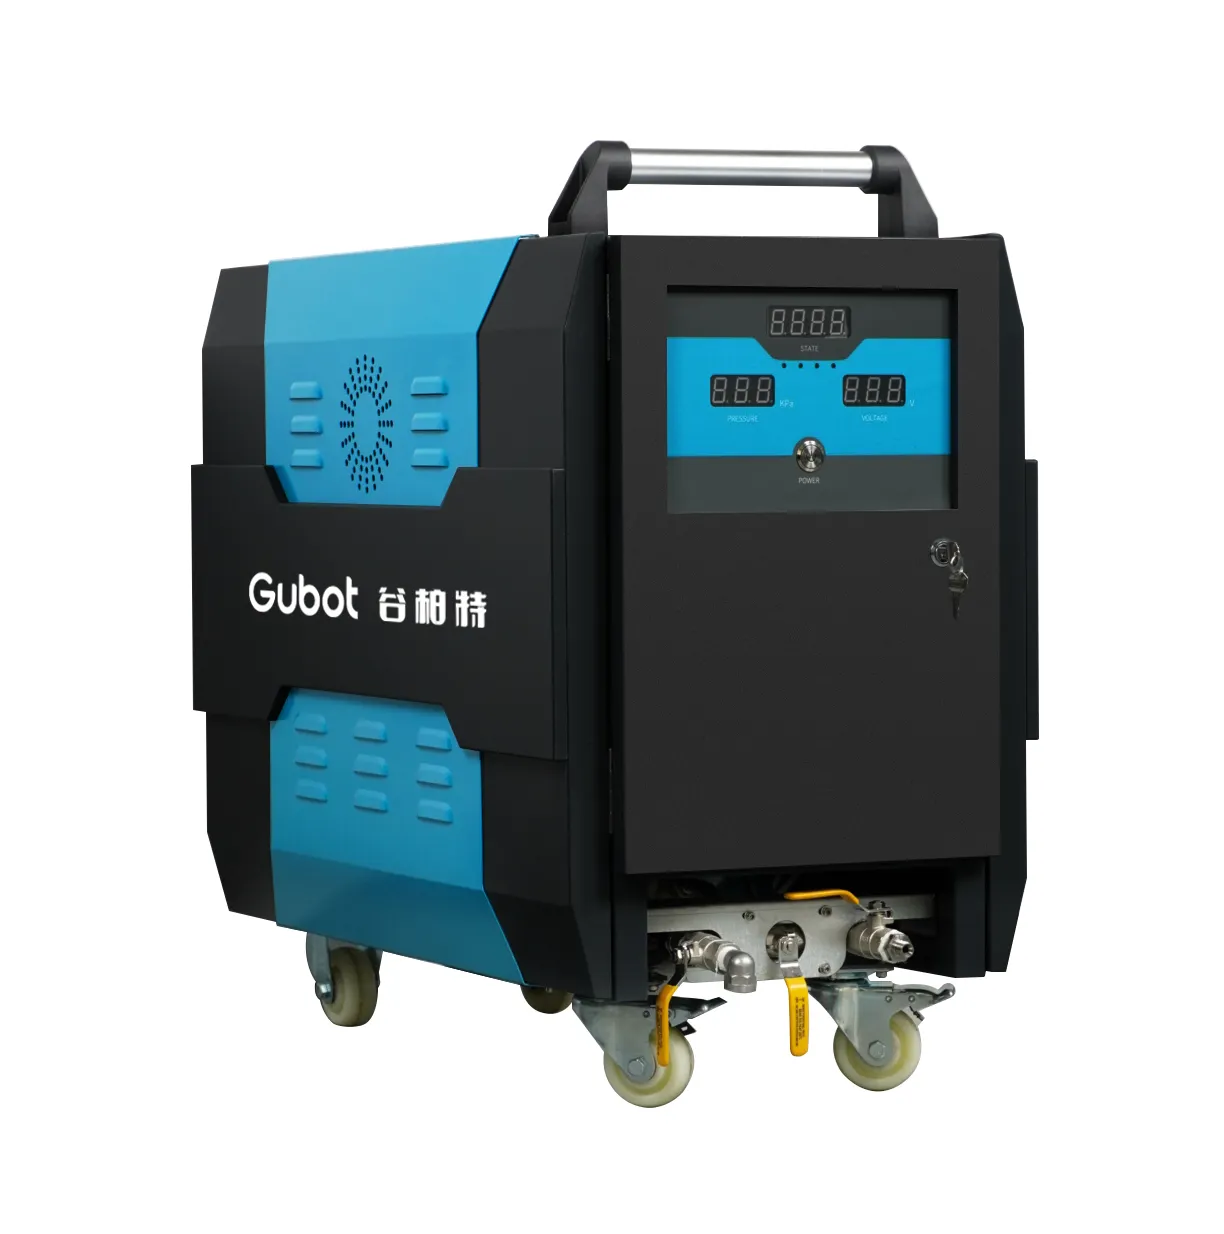 GUBOT جهاز تنظيف بخار غاز السوائل المسال متنقل، معدات تنظيف قنوات الهواء عالية الضغط، وقت عمل مستمر 4 ساعات